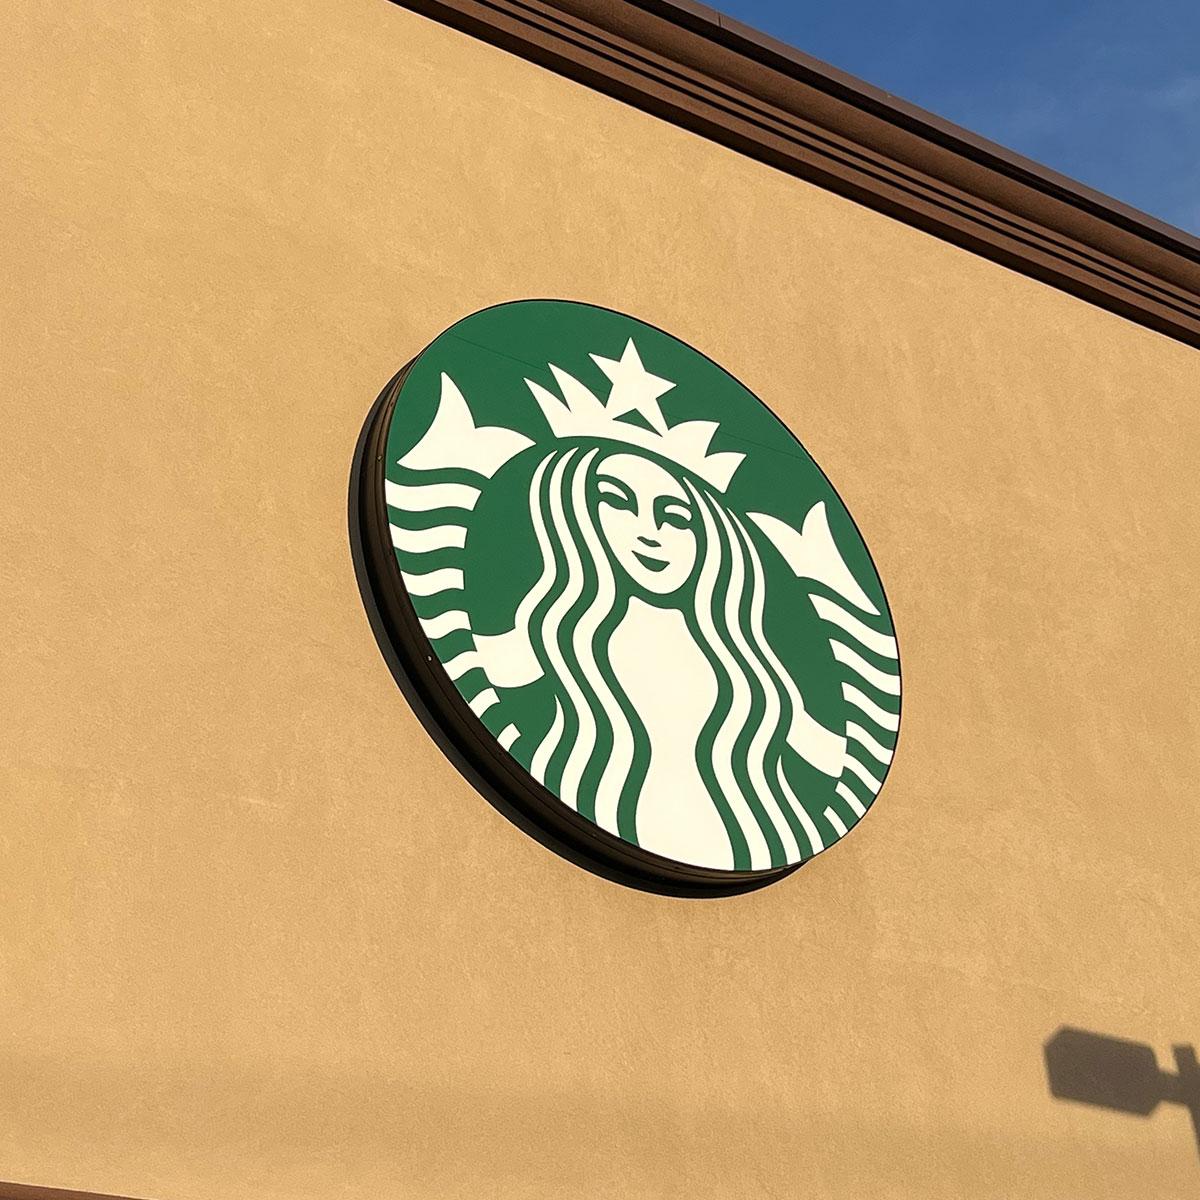 Soak Up the Sun with Starbucks New Summer Merchandise